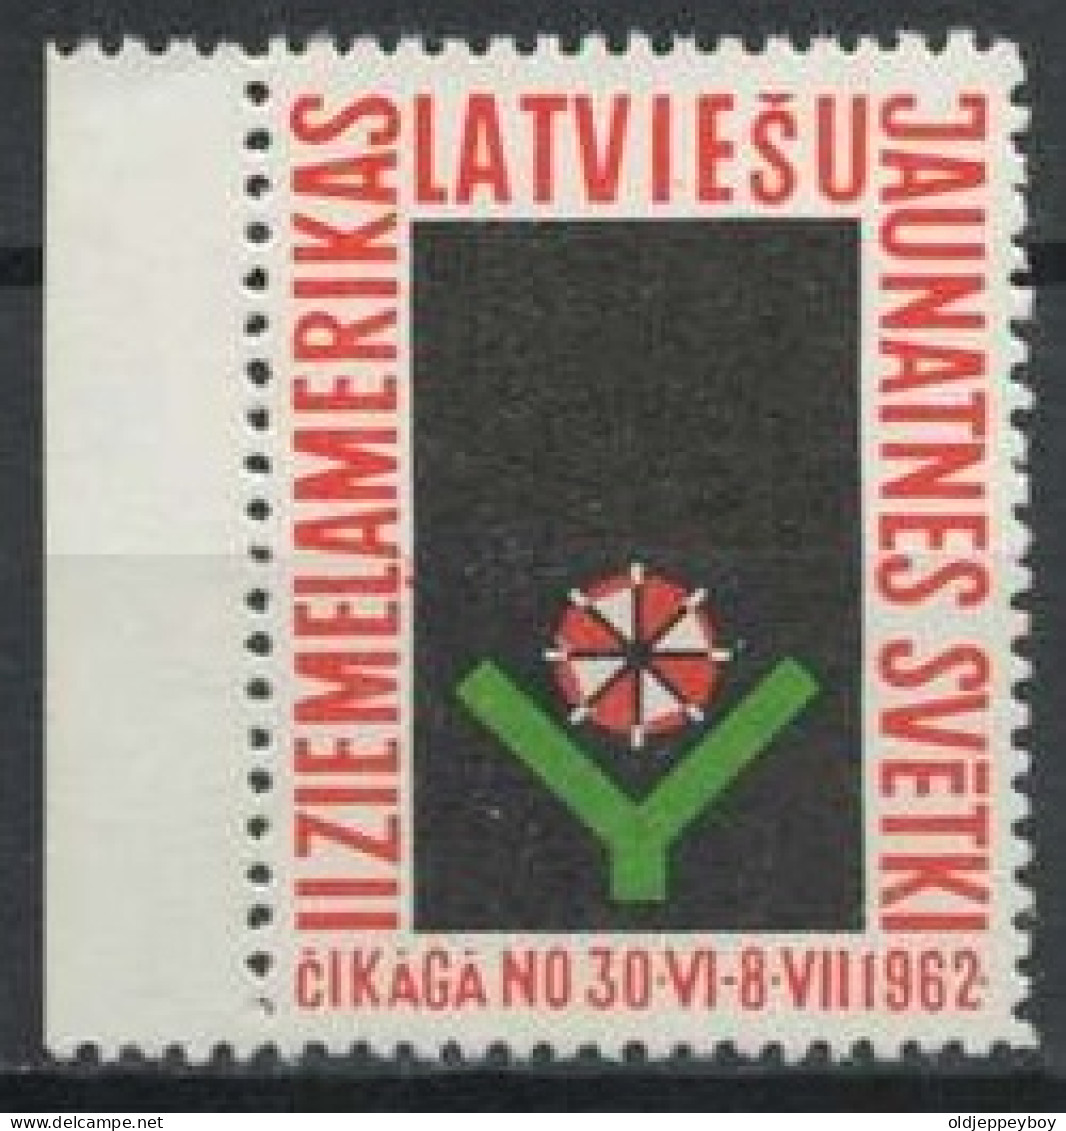  Latvia  1962, Copera Fonds, Exile, Pairs  Pfadfinder Reklamemarke VIGNETTE CINDERELLA SCOUTS SCOUTING - Ongebruikt